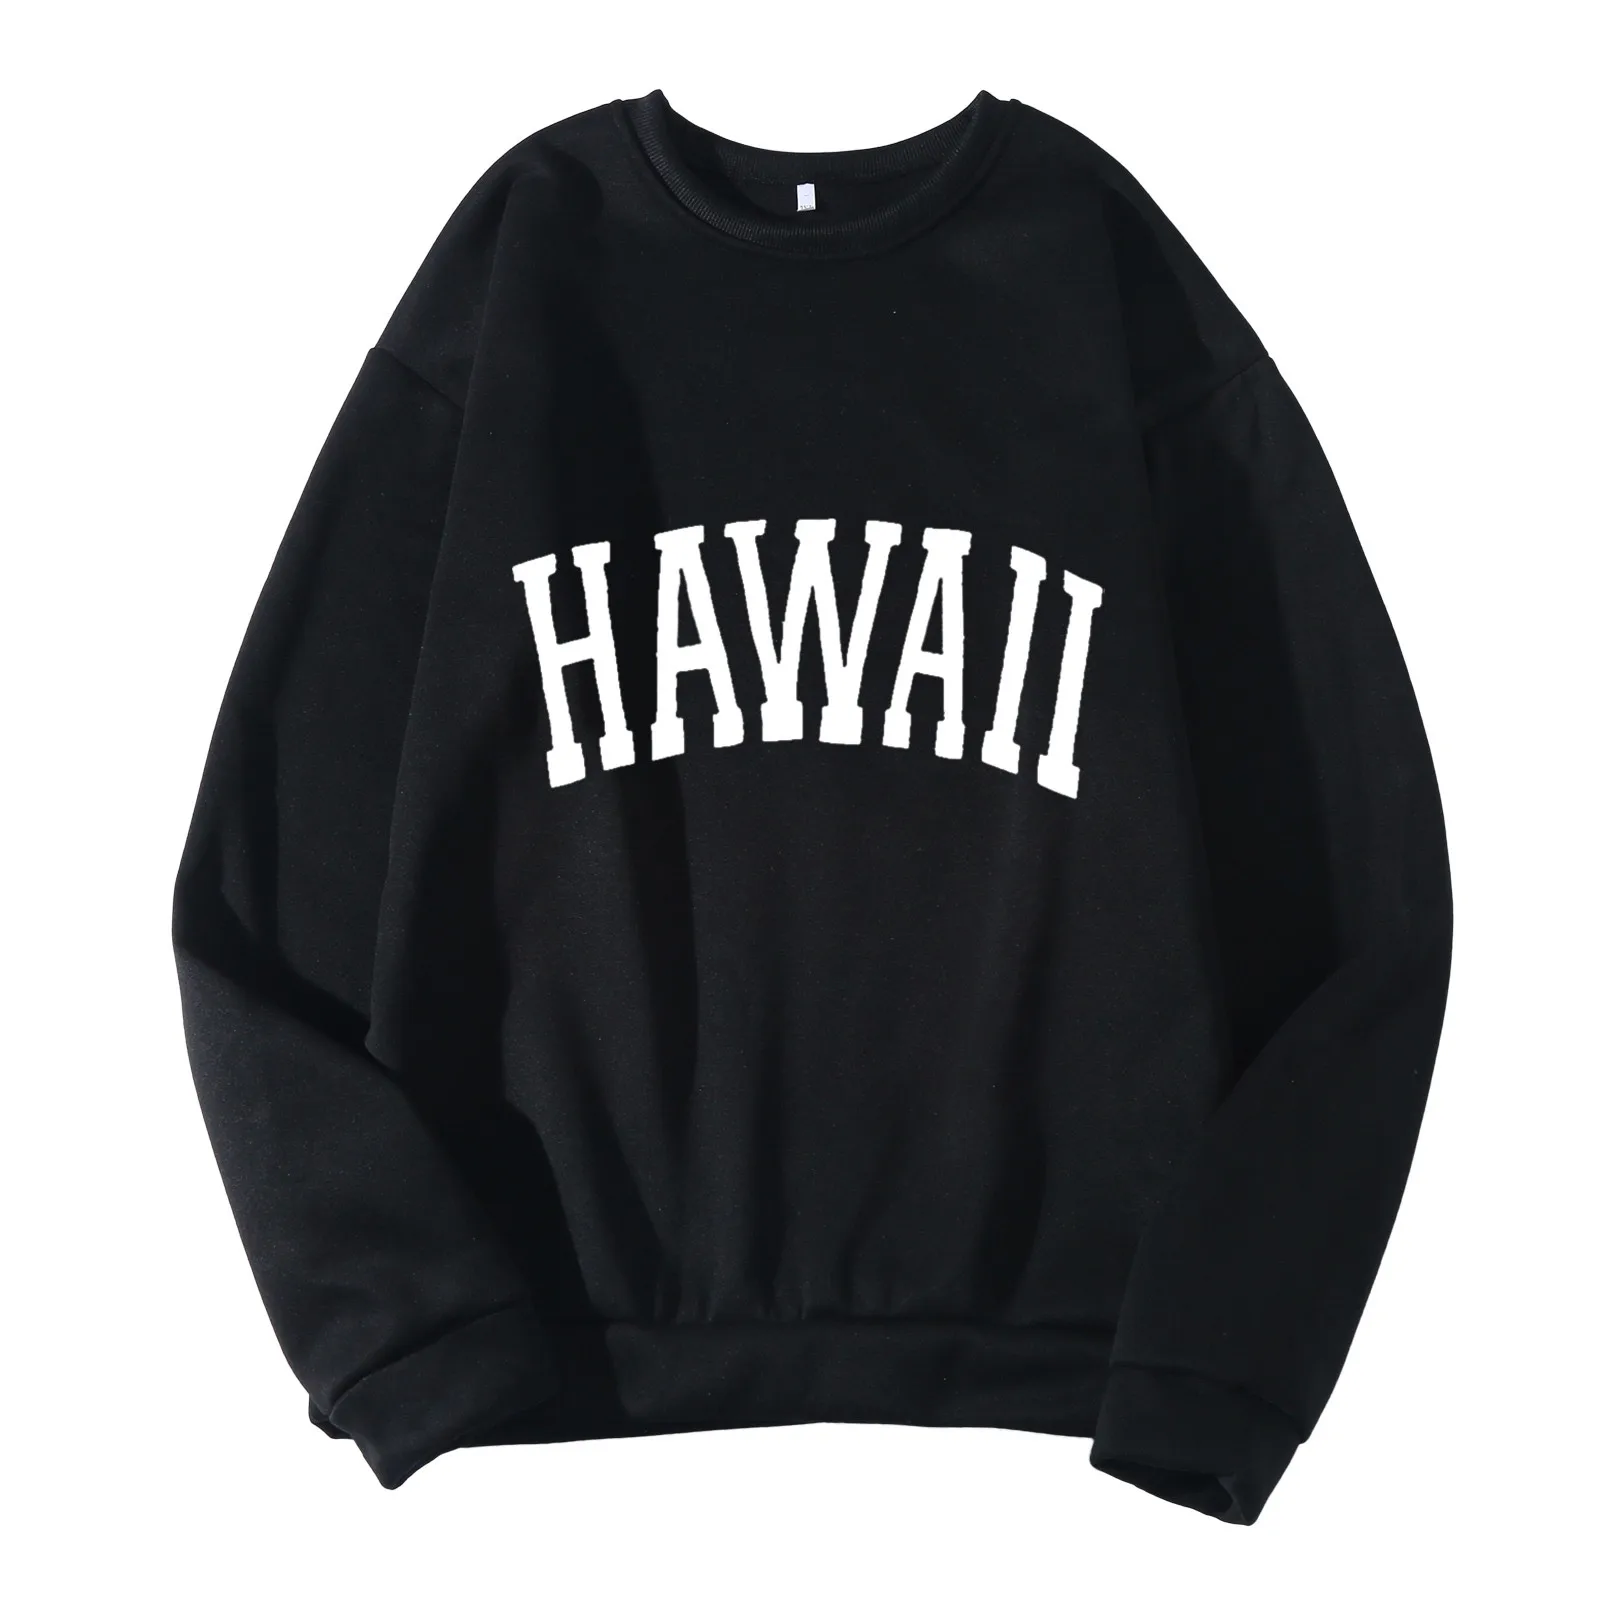 

Hawaii Men Letter Graphic Print Sweetshirts Round Neck Long Sleeve Tops Hoodless Sweatshirt Oversize Vintage Streetwear Clothing